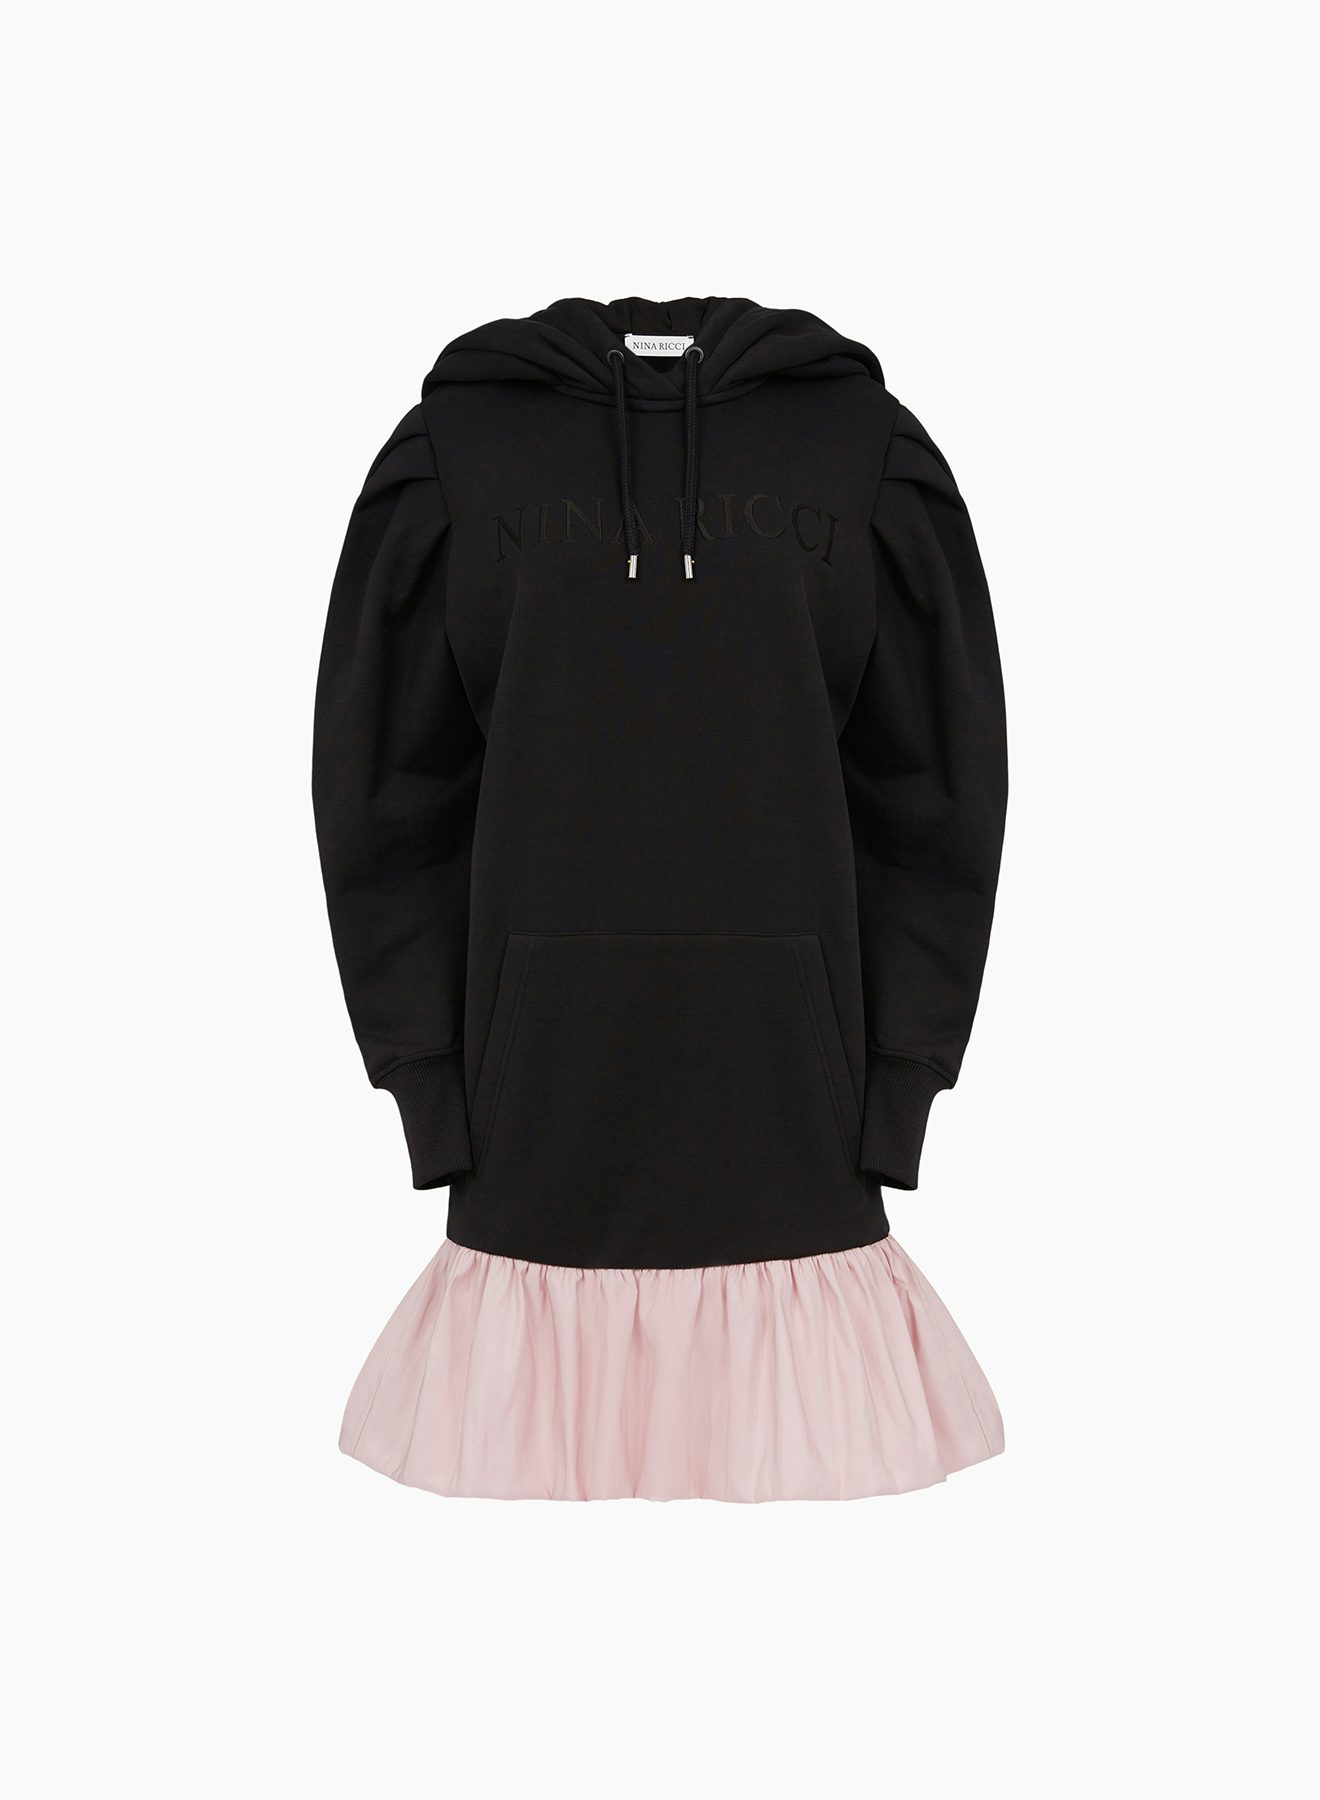 Peplum hoodie dress in black - Nina Ricci